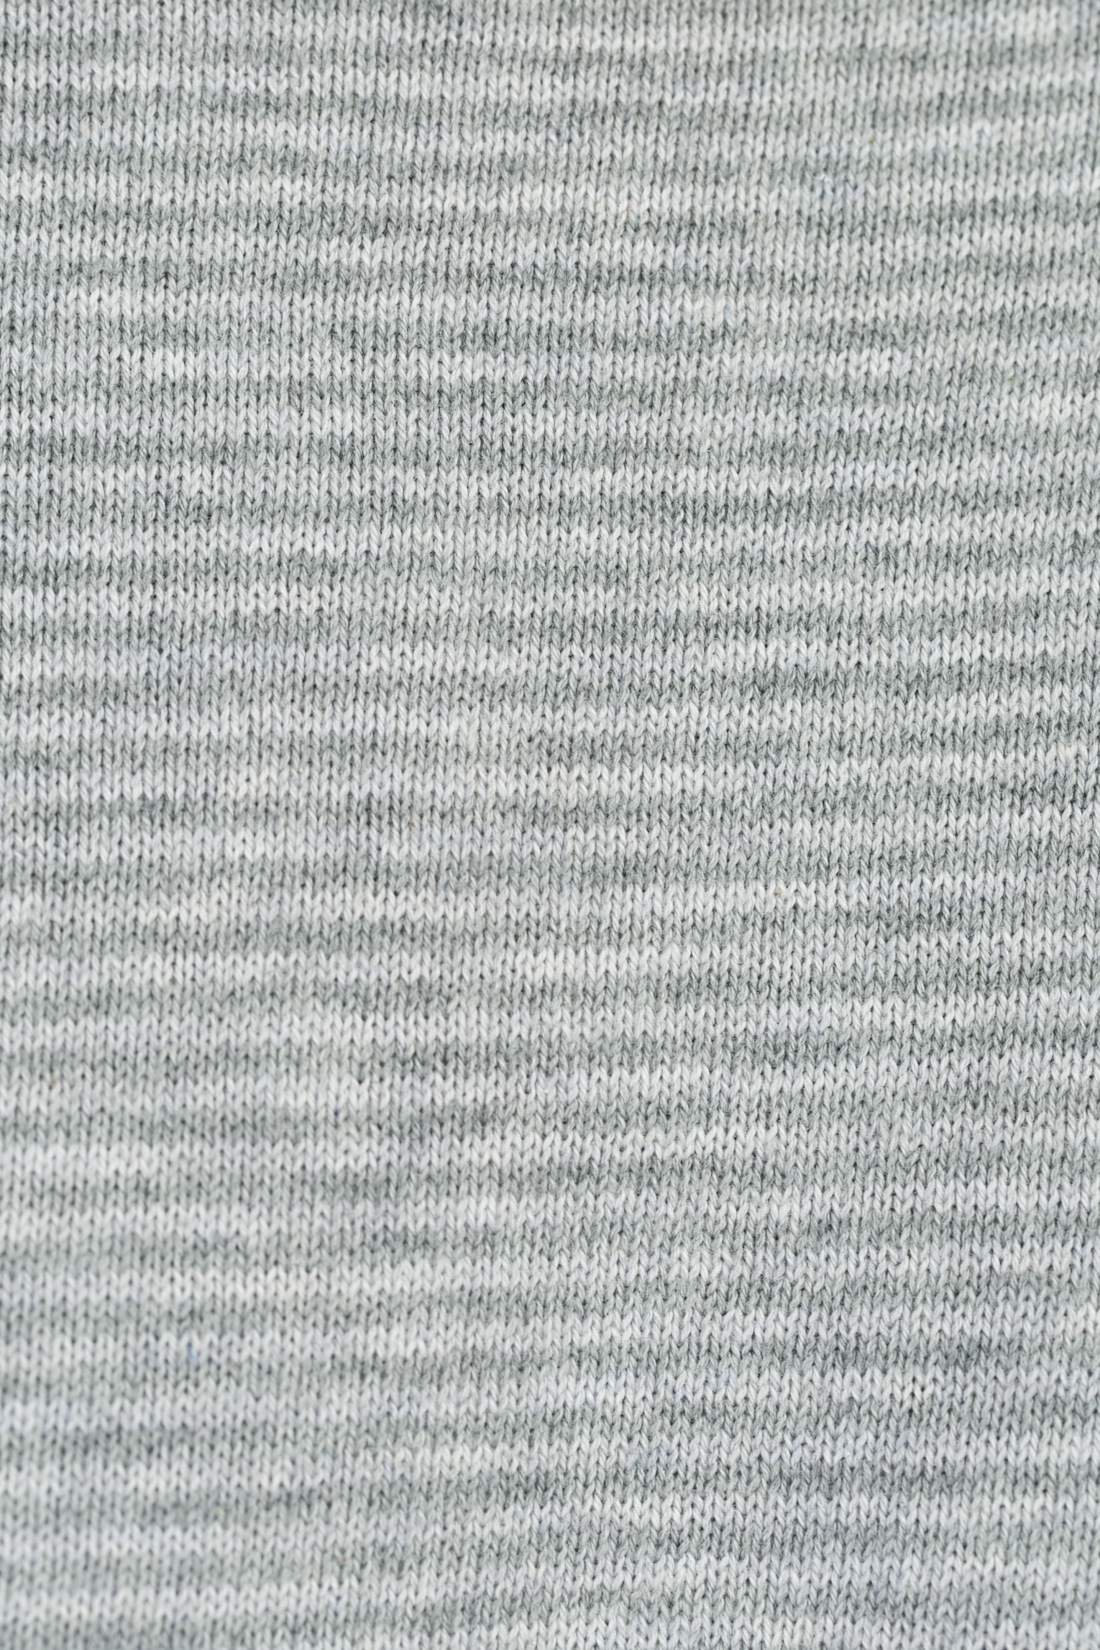 Джемпер в тонкую полоску (арт. baon B637018), размер XL, цвет серый Джемпер в тонкую полоску (арт. baon B637018) - фото 3